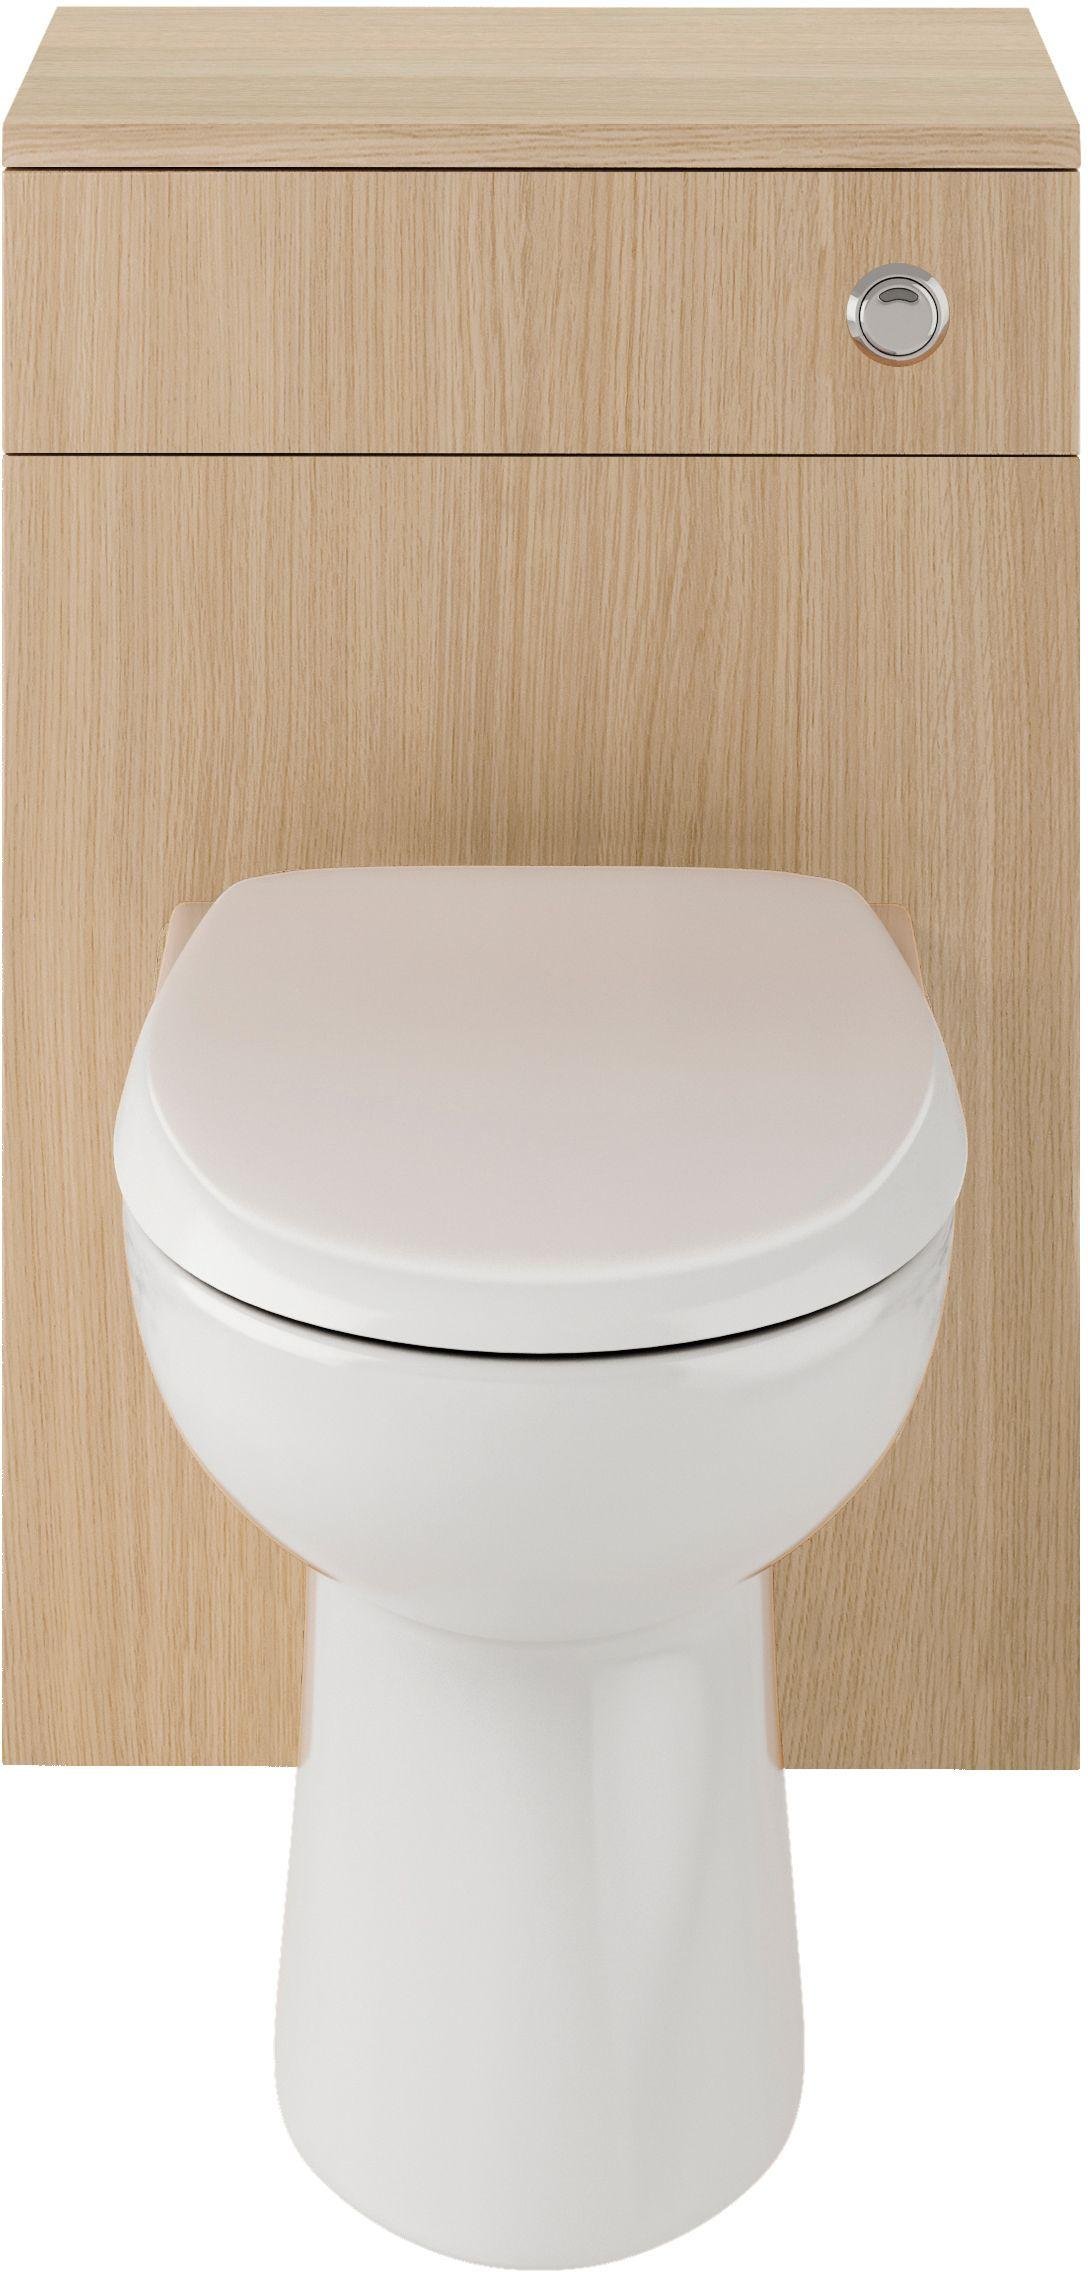 Lavari Ferne WC Unit Oak with Toilet and Seat